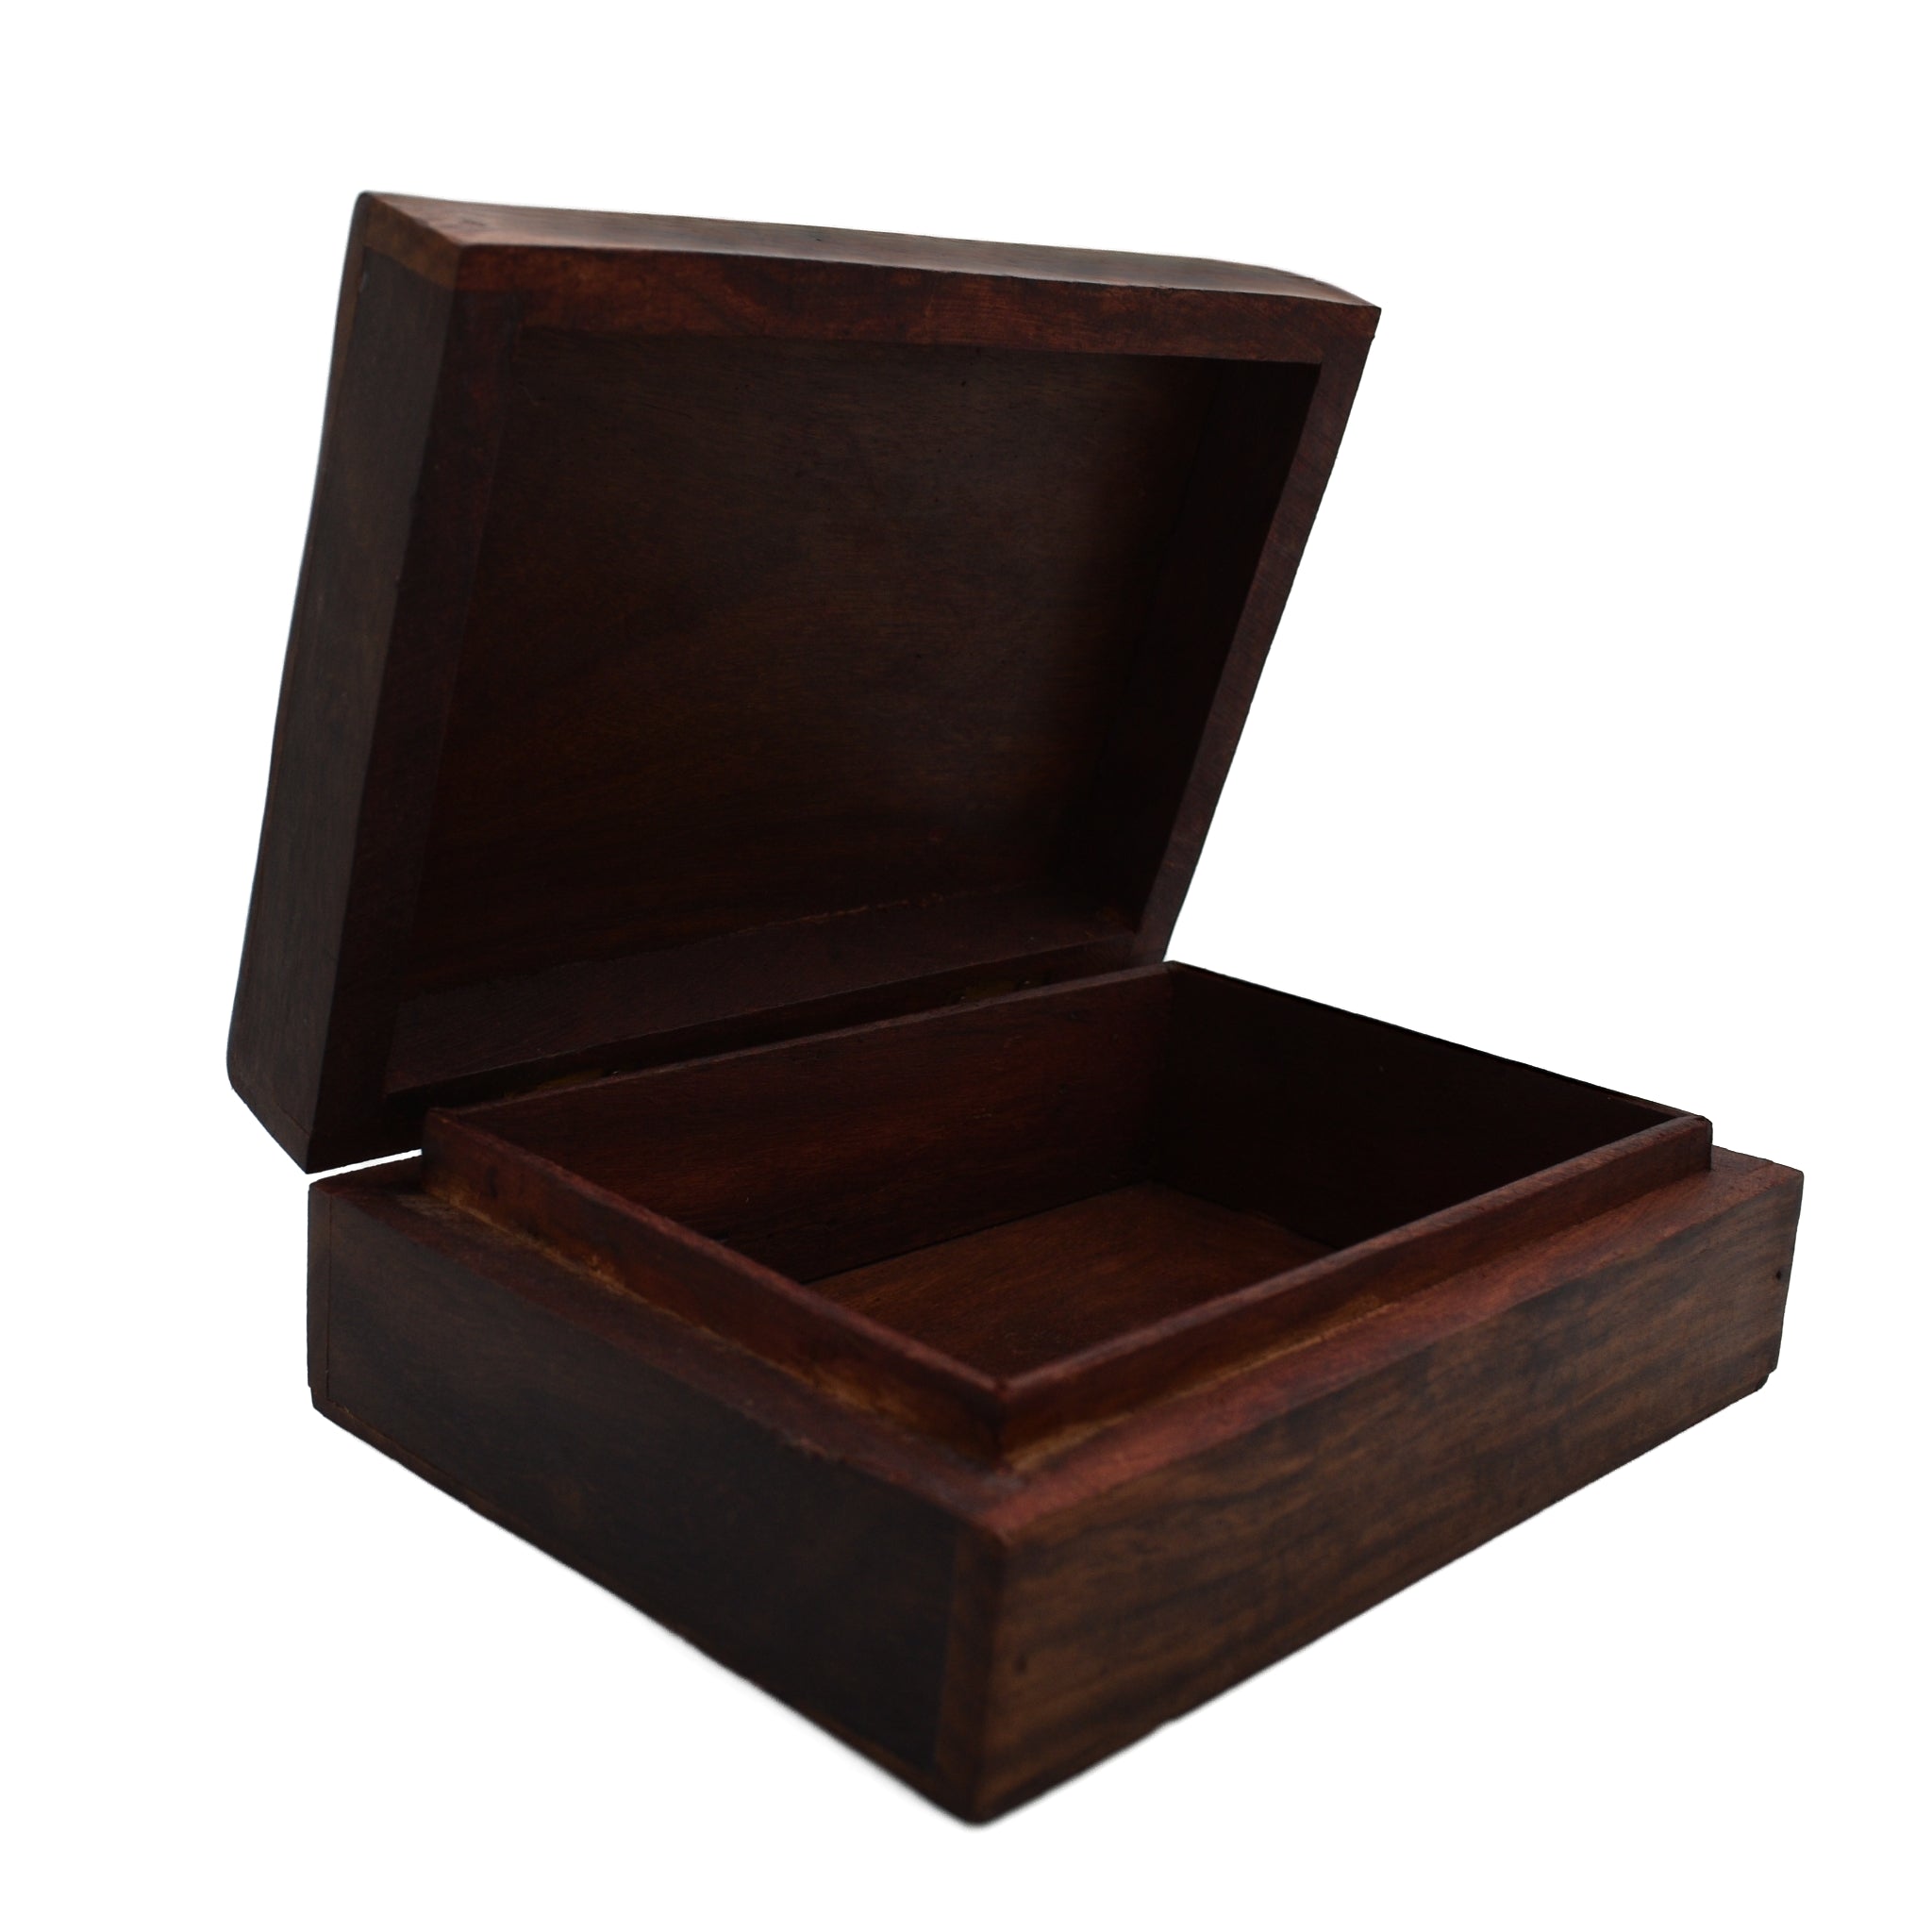 Wood box, dark color open 